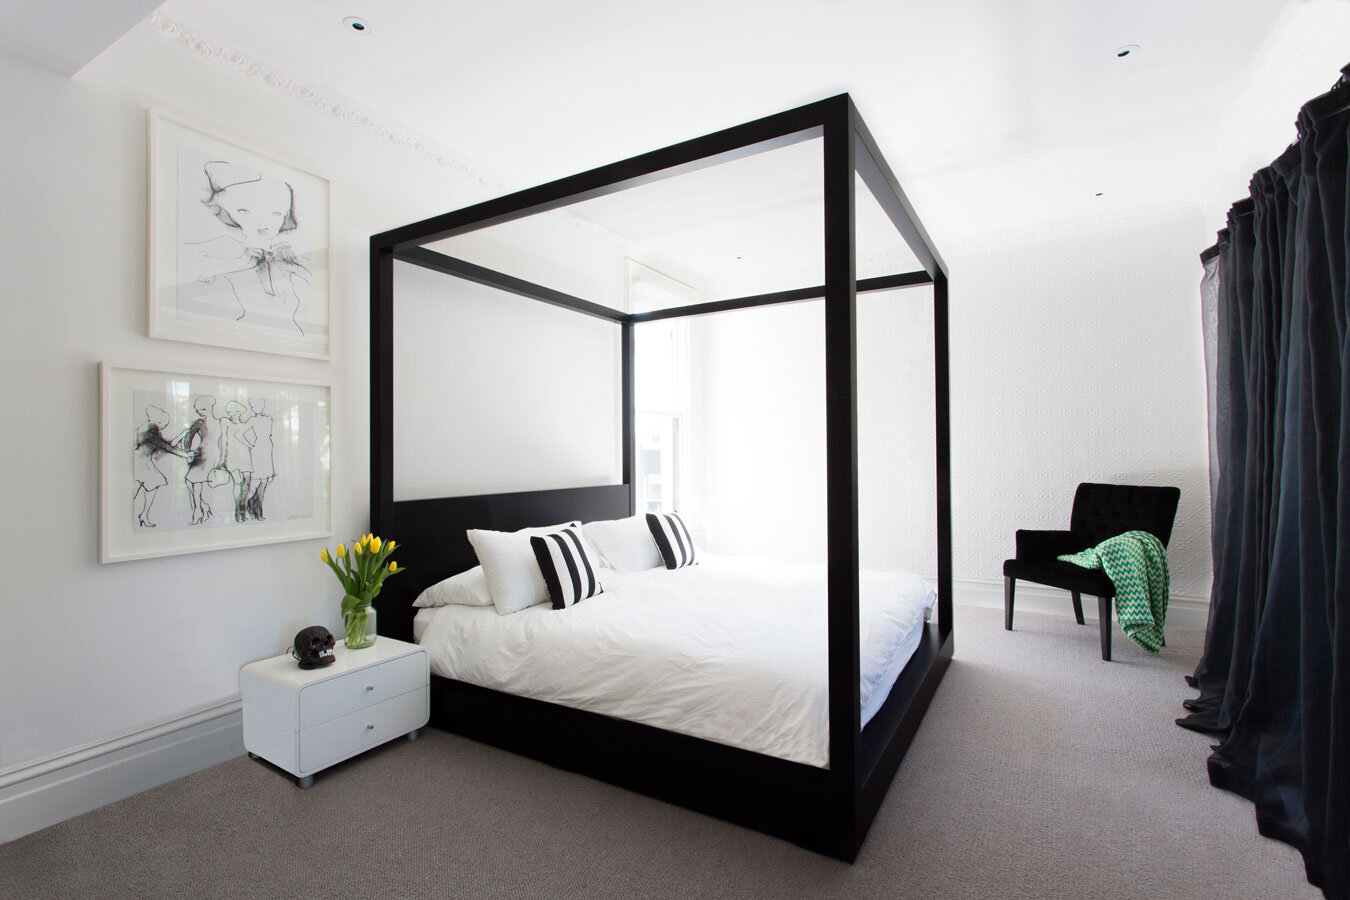 House with contemporary interior design - Lilley Residence - HomeWorldDesign (13)